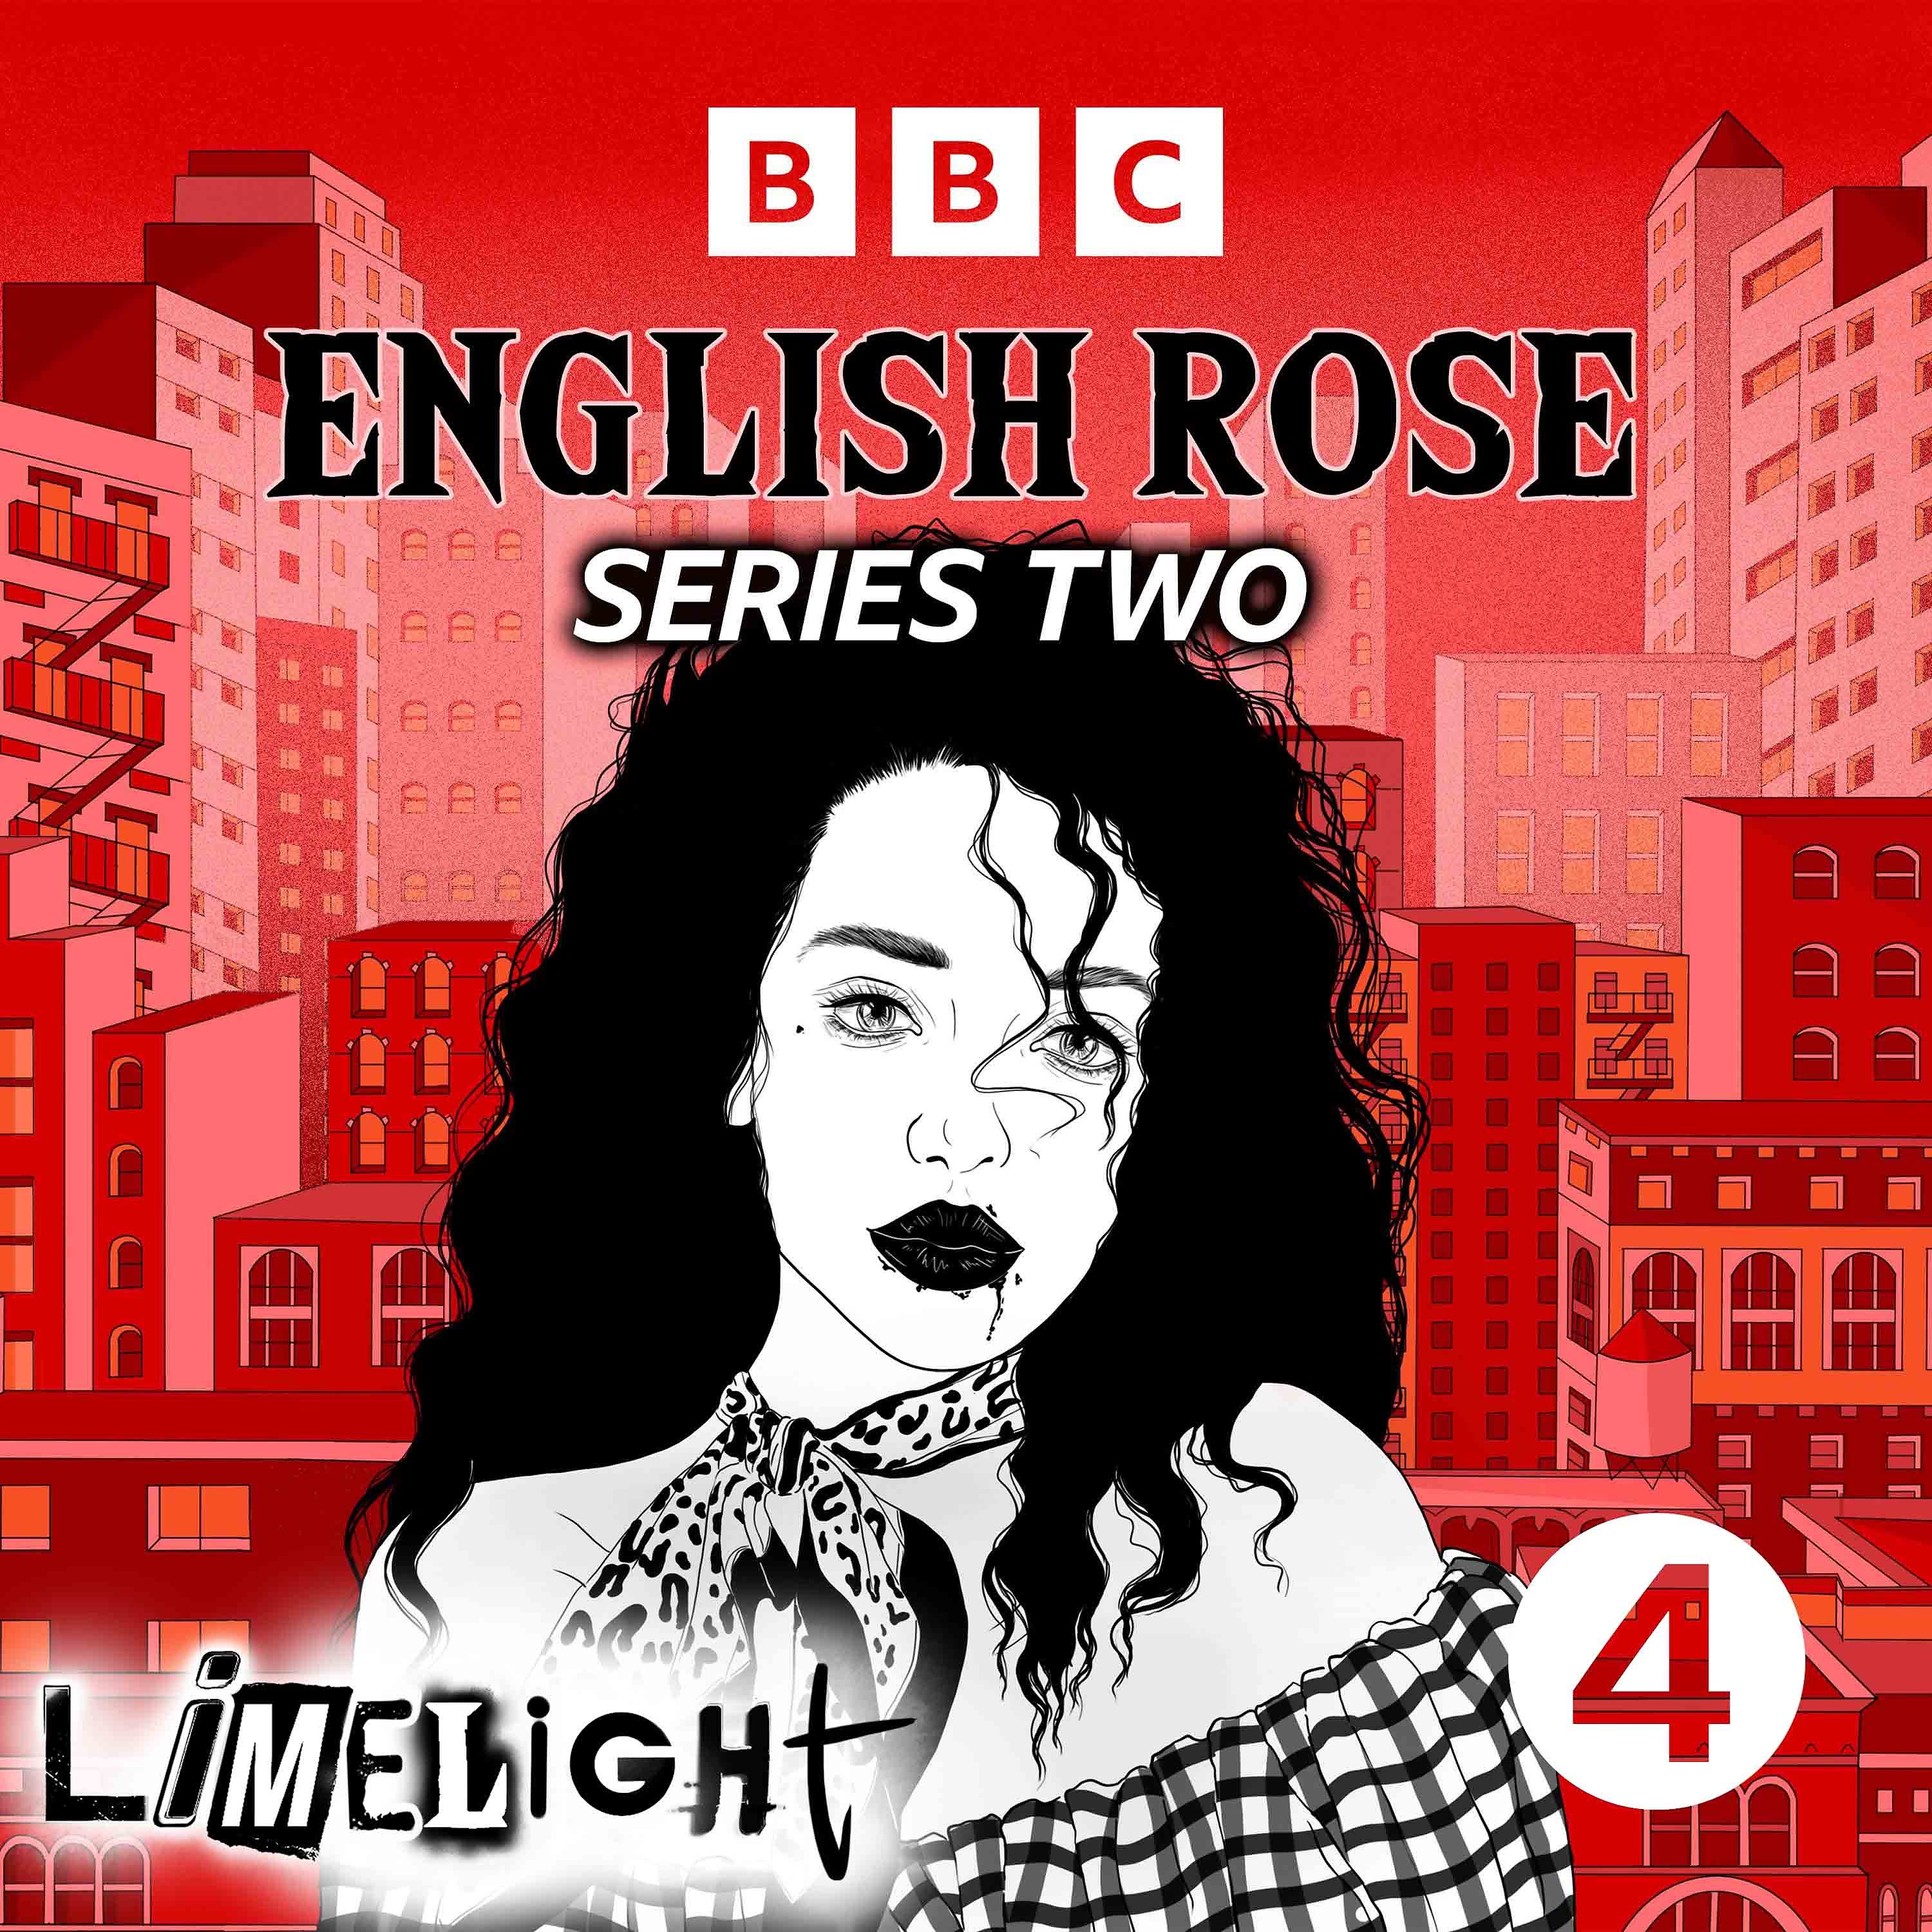 Introducing English Rose - Series 2